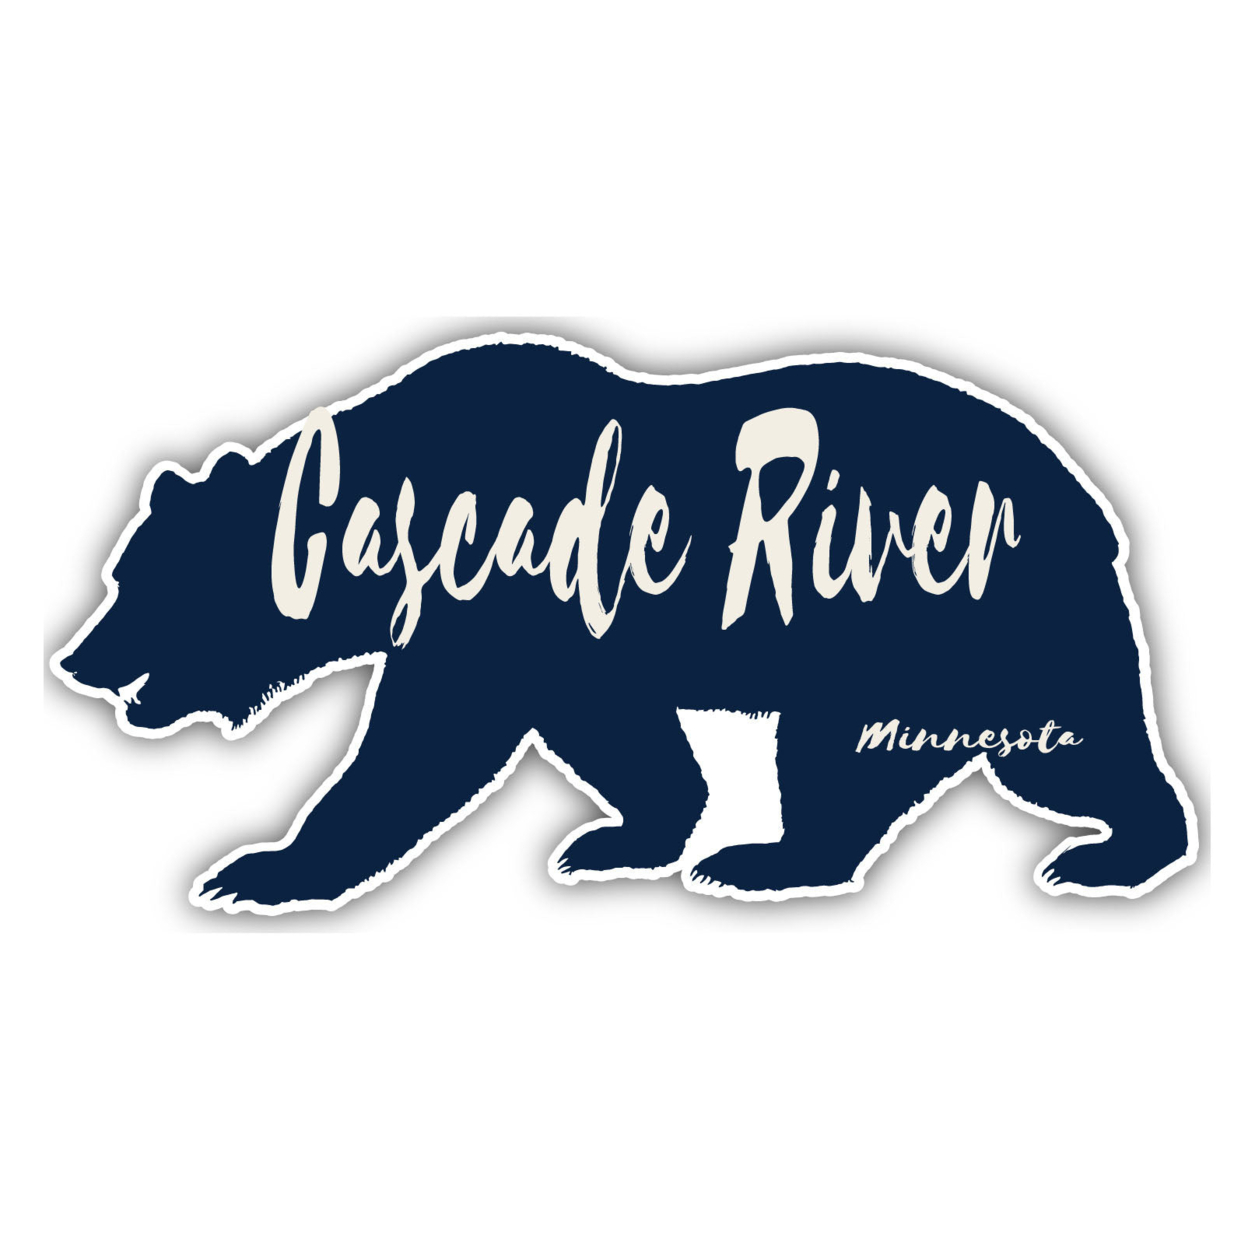 Cascade River Minnesota Souvenir Decorative Stickers (Choose Theme And Size) - 4-Pack, 8-Inch, Bear